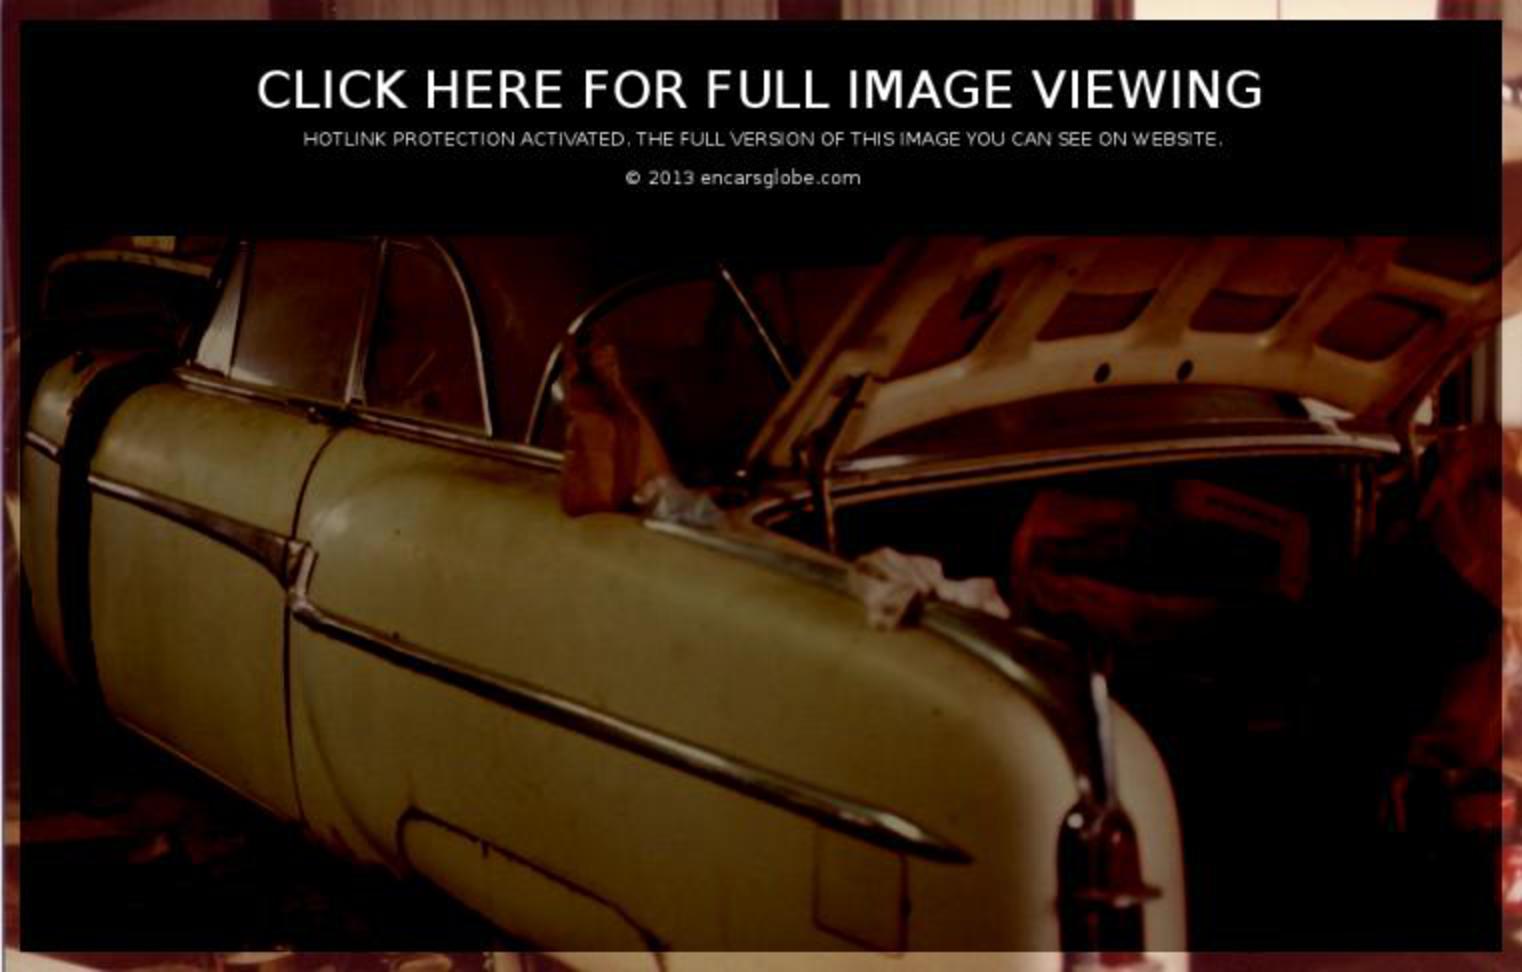 Packard Mayfair: Description of the model, photo gallery ...